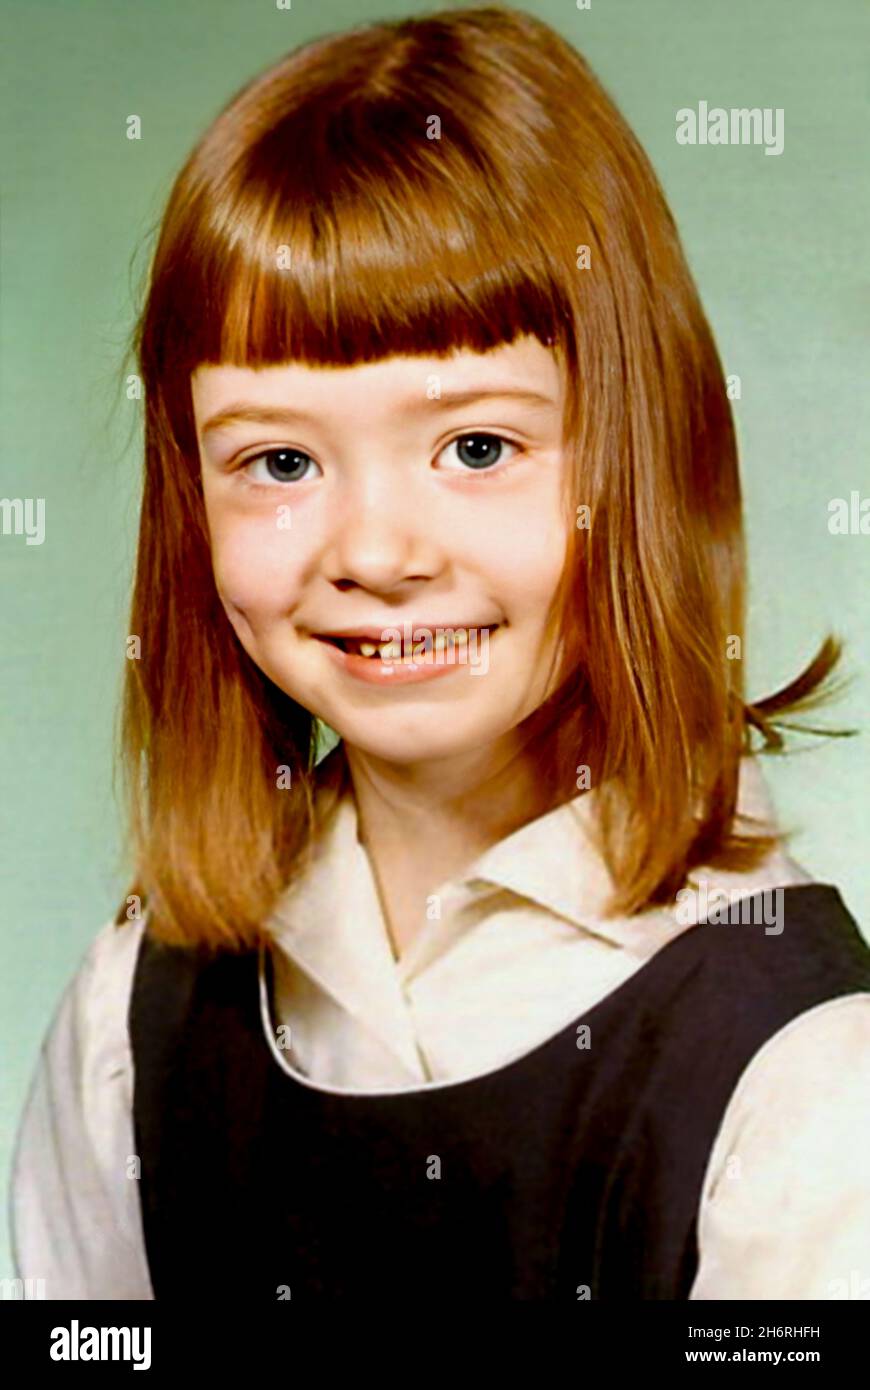 1967 , USA : The celebrated american singer SUZANNE VEGA ( born 11 july 1959 ), when was a young girl aged 8 . Unknown photographer. - HISTORY - FOTO STORICHE - personalità da giovane giovani - ragazza - personality personalities when was young girl - INFANZIA - CHILDHOOD - POP FOLK MUSIC - MUSICA - cantante - bambino - BAMBINI - BAMBINA - CHILD - CHILDREN - BAMBINO - CHILDHOOD - INFANZIA - redhead - capelli rossi - ginger - smile - sorriso --- ARCHIVIO GBB Stock Photo